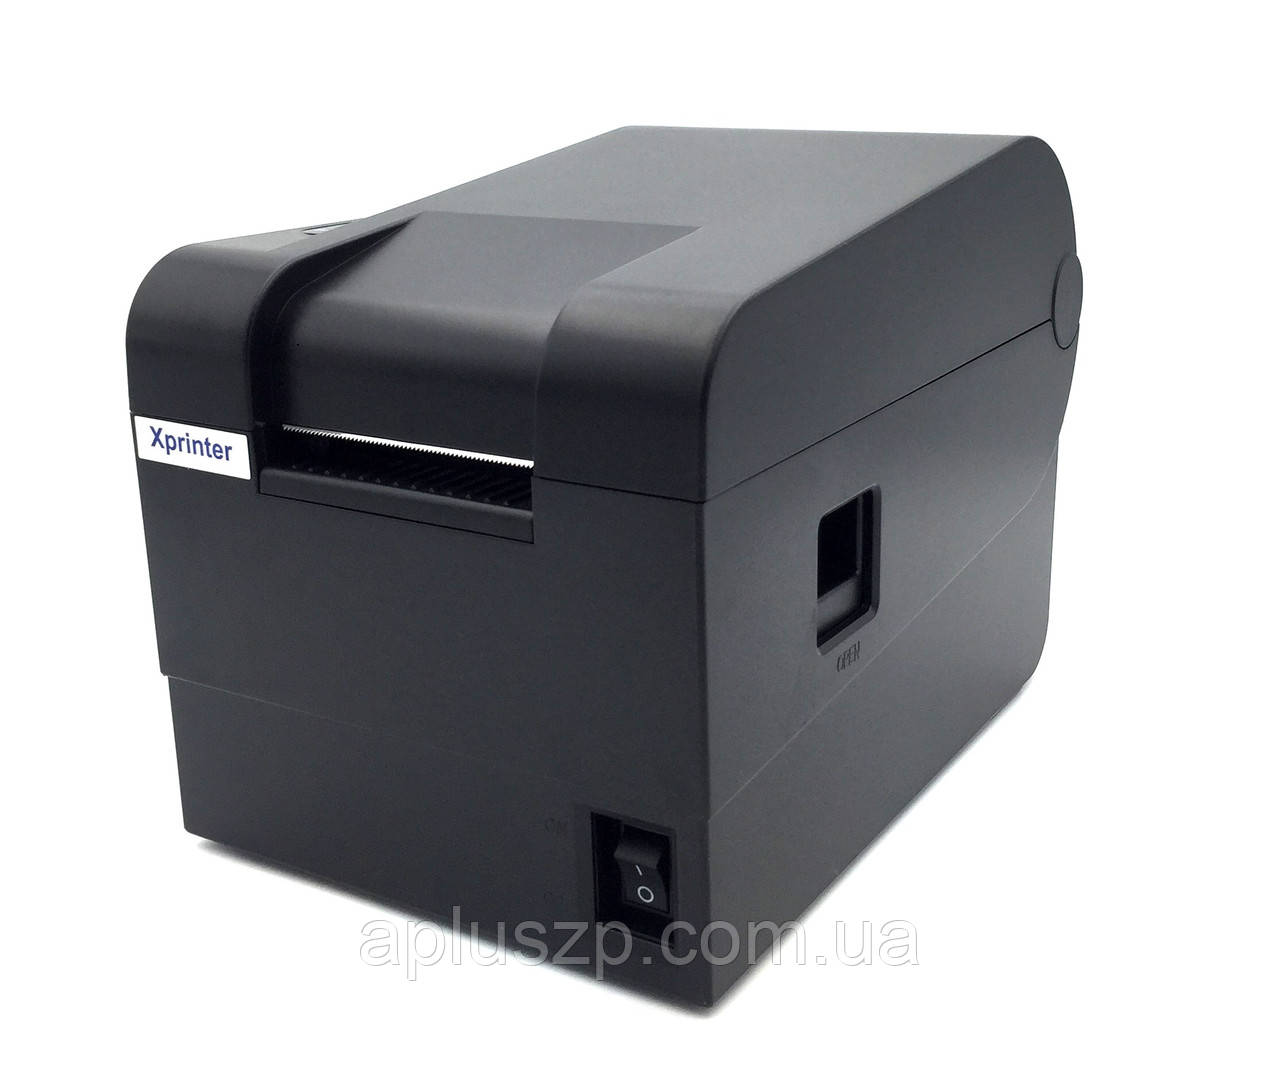 Принтер этикеток Xprinter XP 235b. Xprinter XP-235b. Xprinter упаковка. Bartender Special Edition Ultralite for Xprinter.